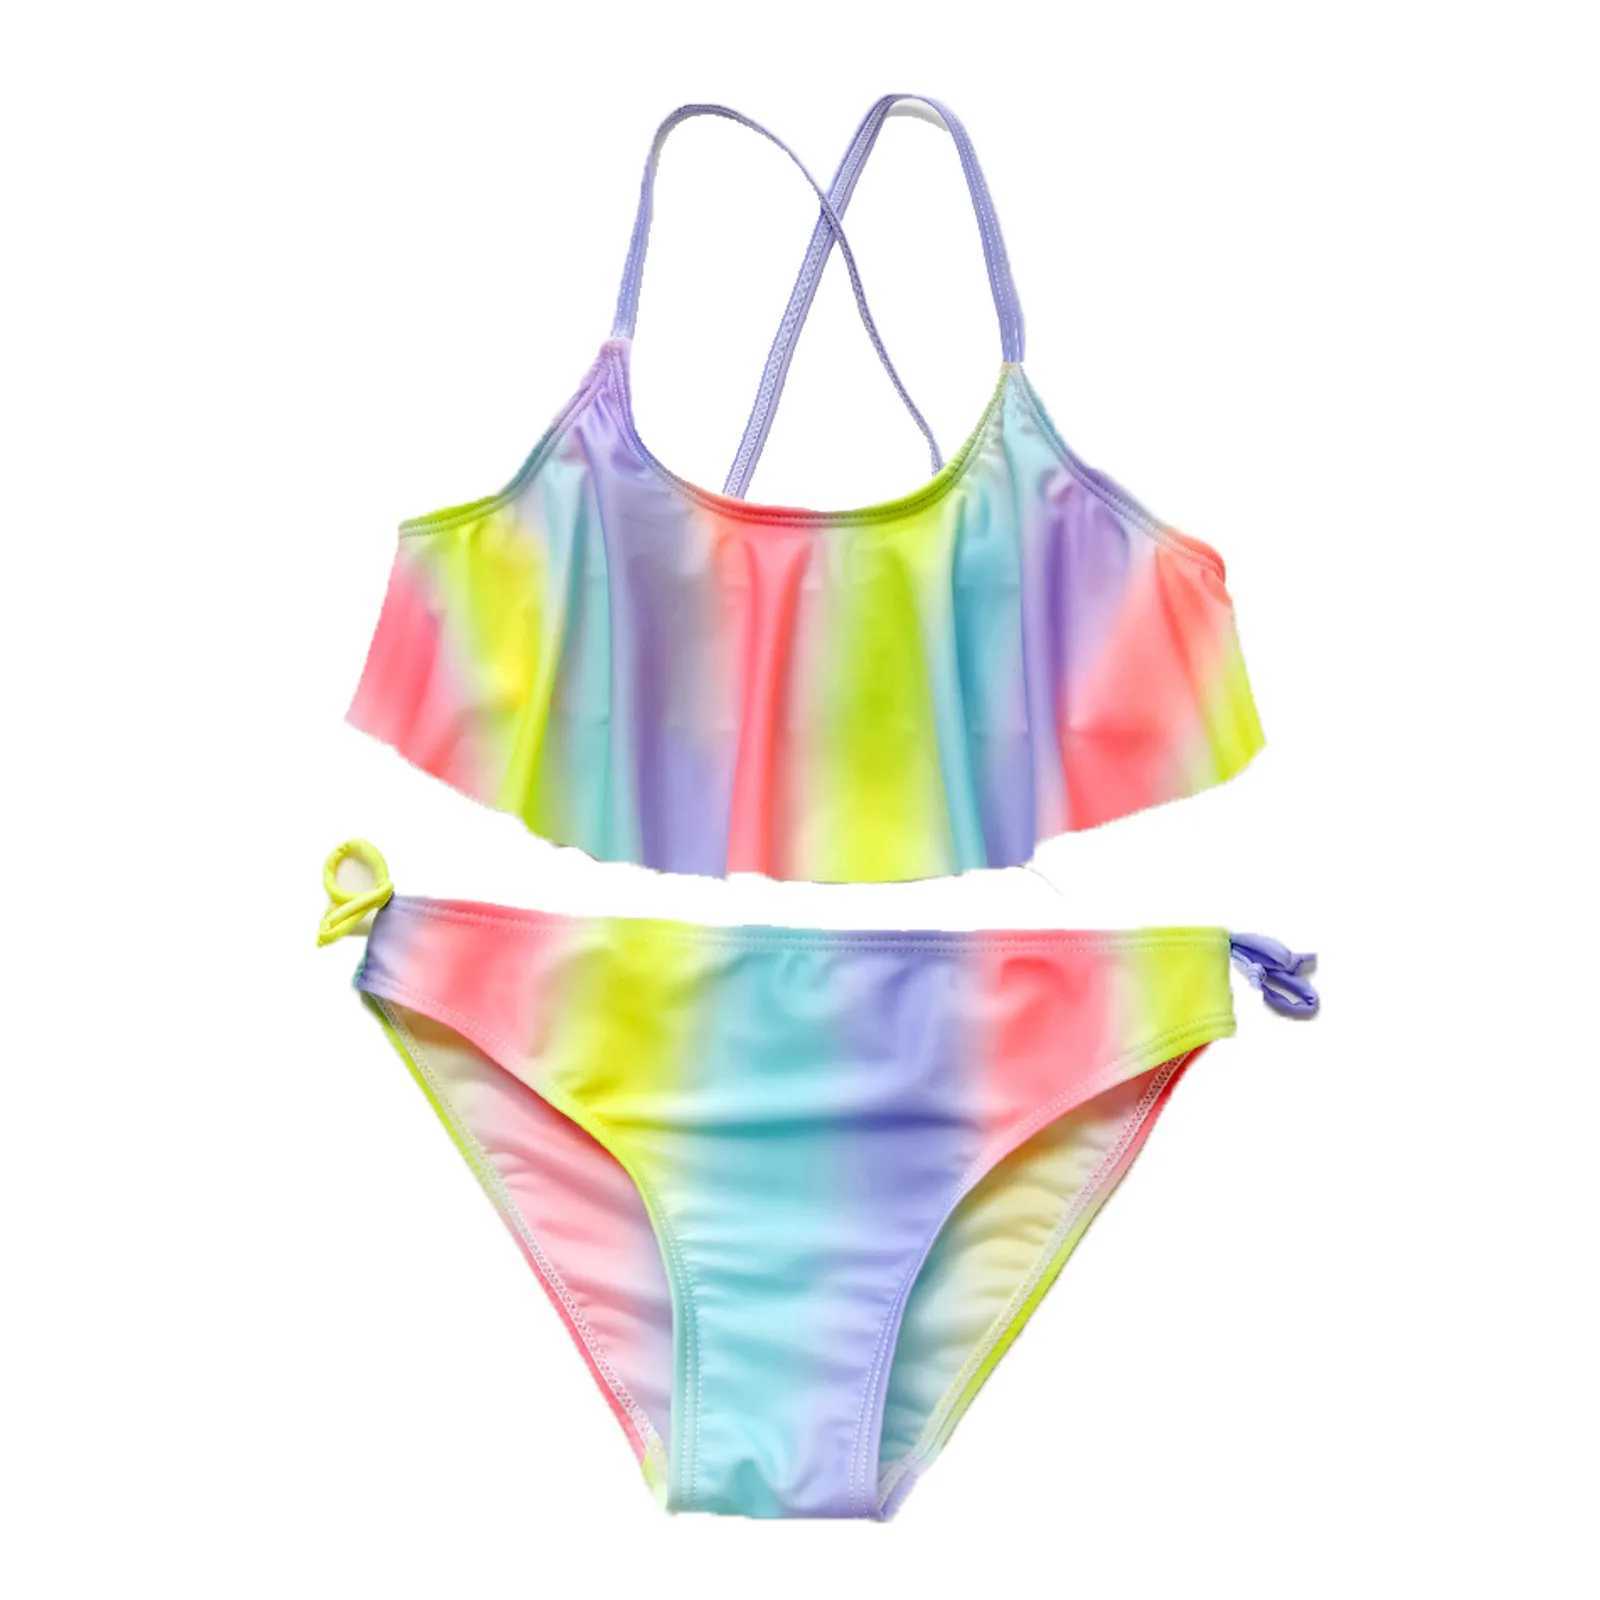 Two-Pieces High quality childrens bikini set Falbala childrens beach suit two-piece swimwear for girls aged 2-16L2405